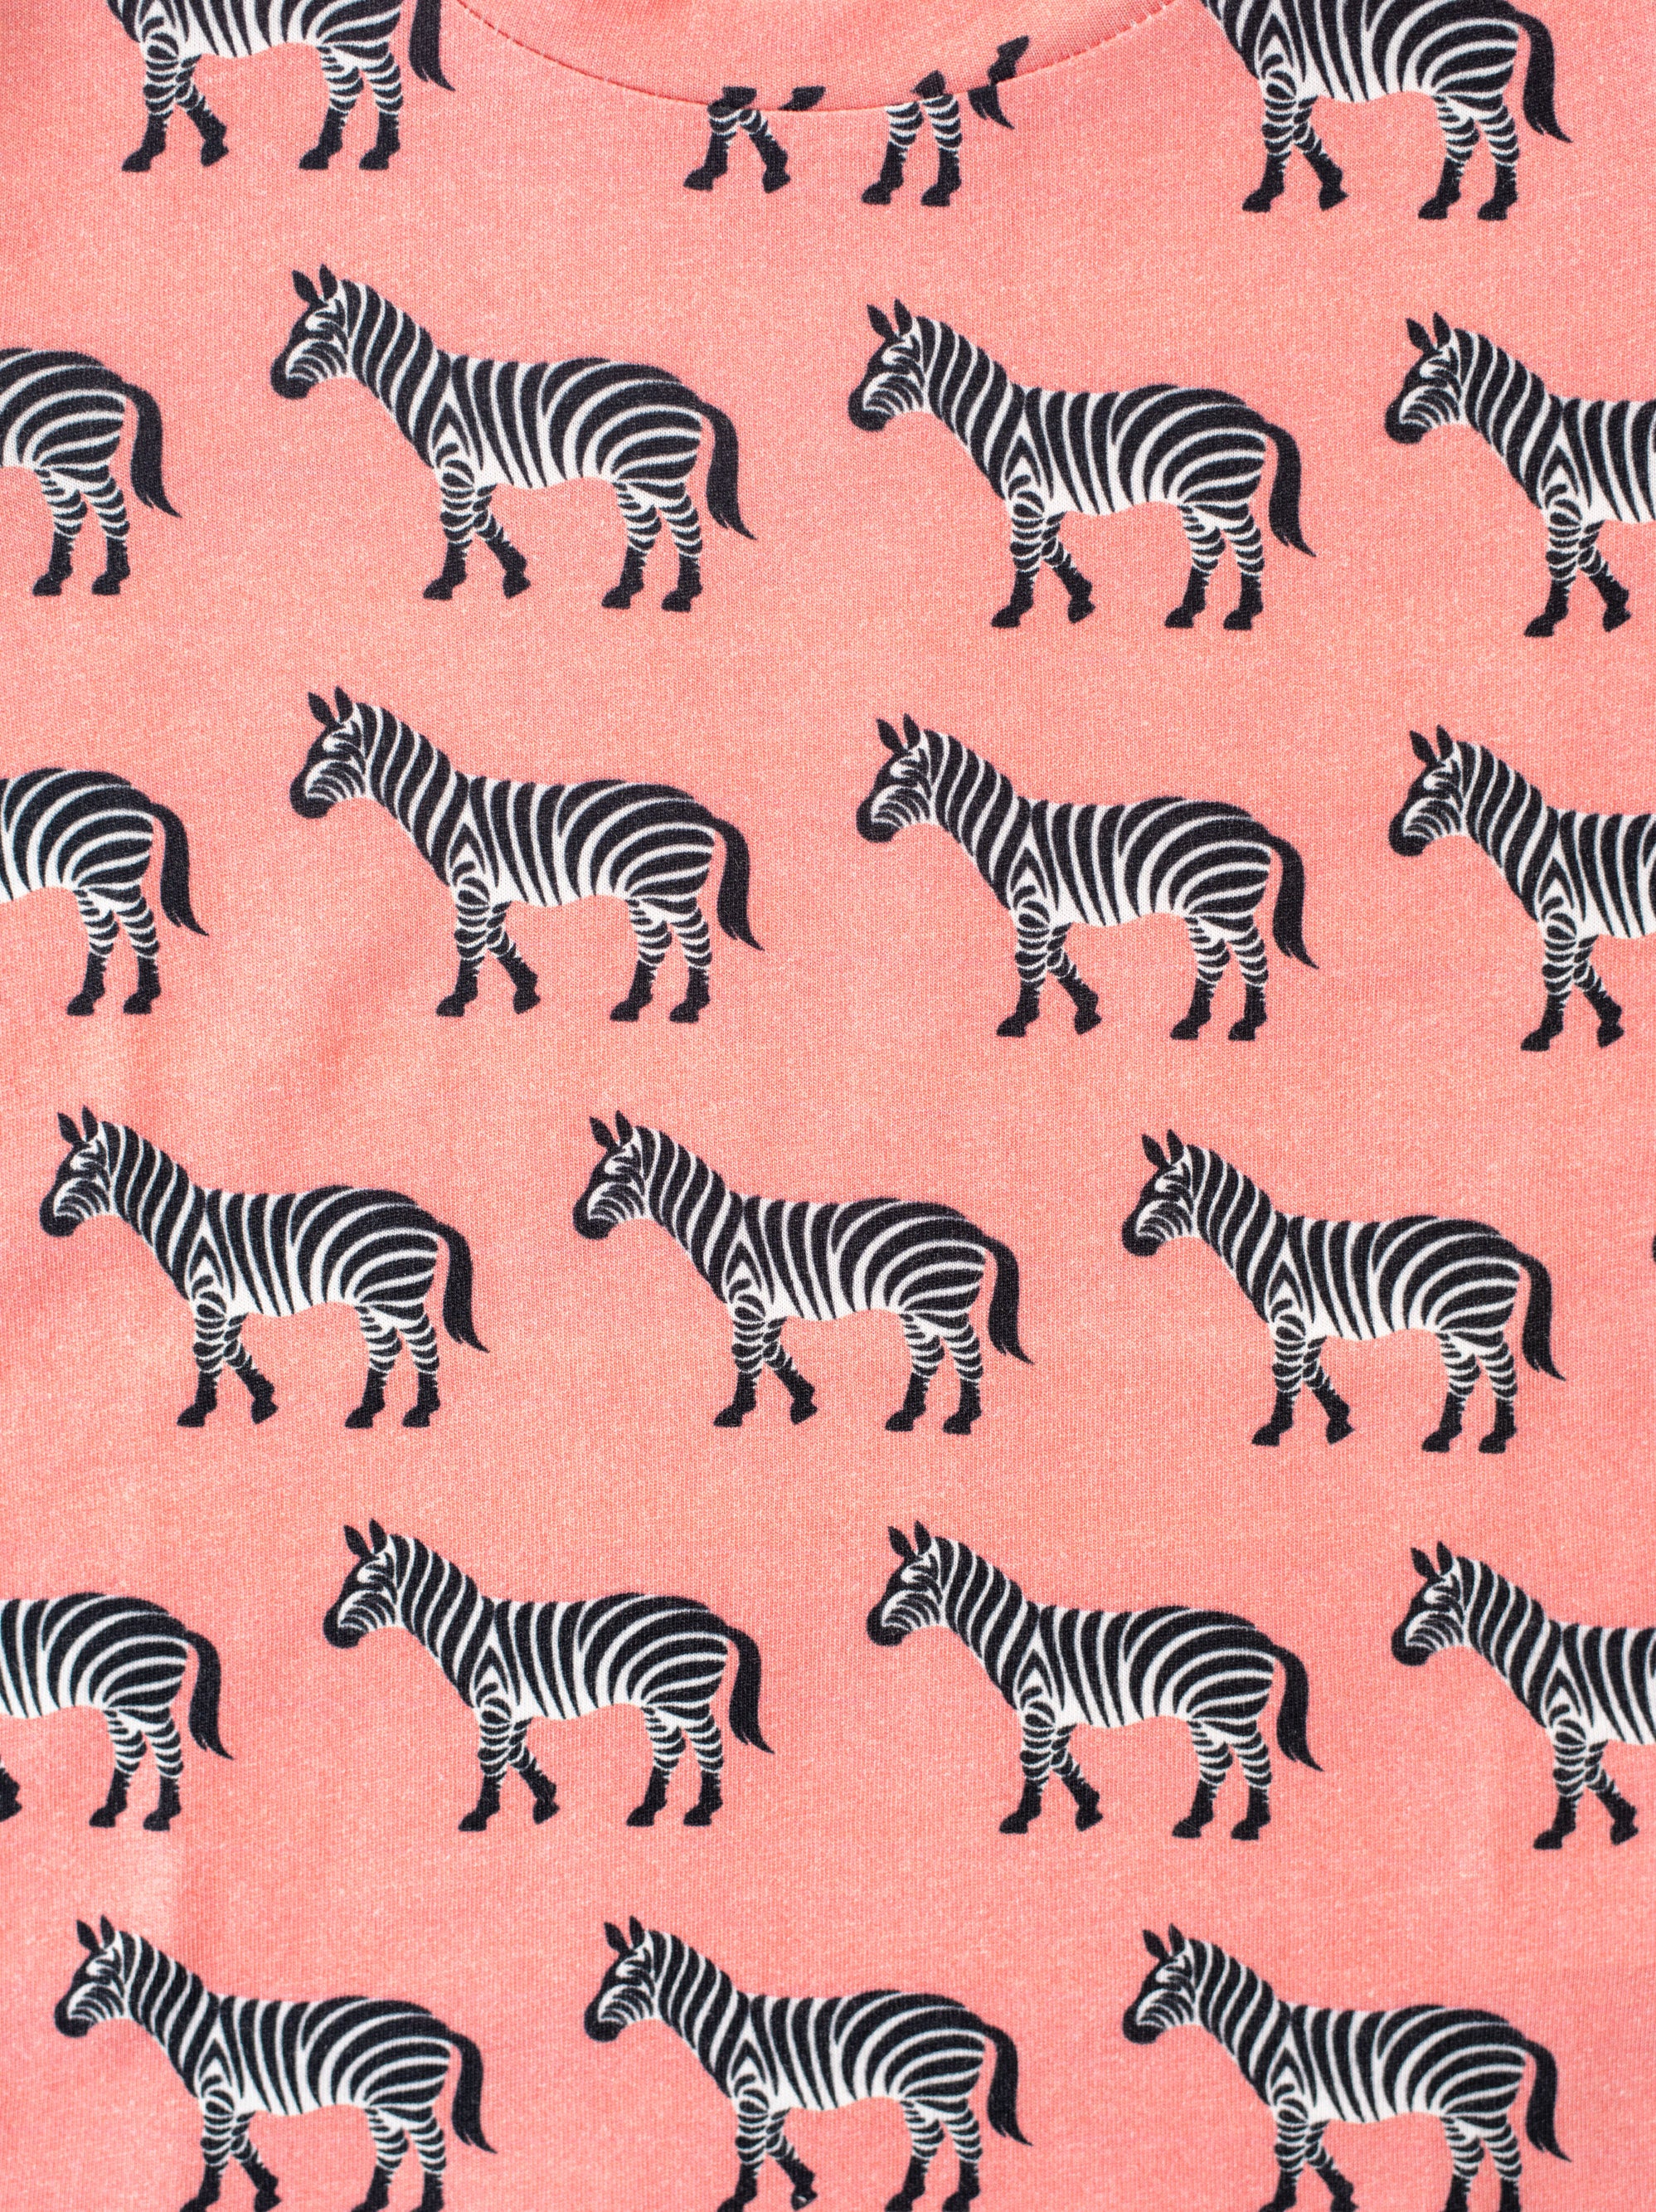 Zebra-Animal Planet